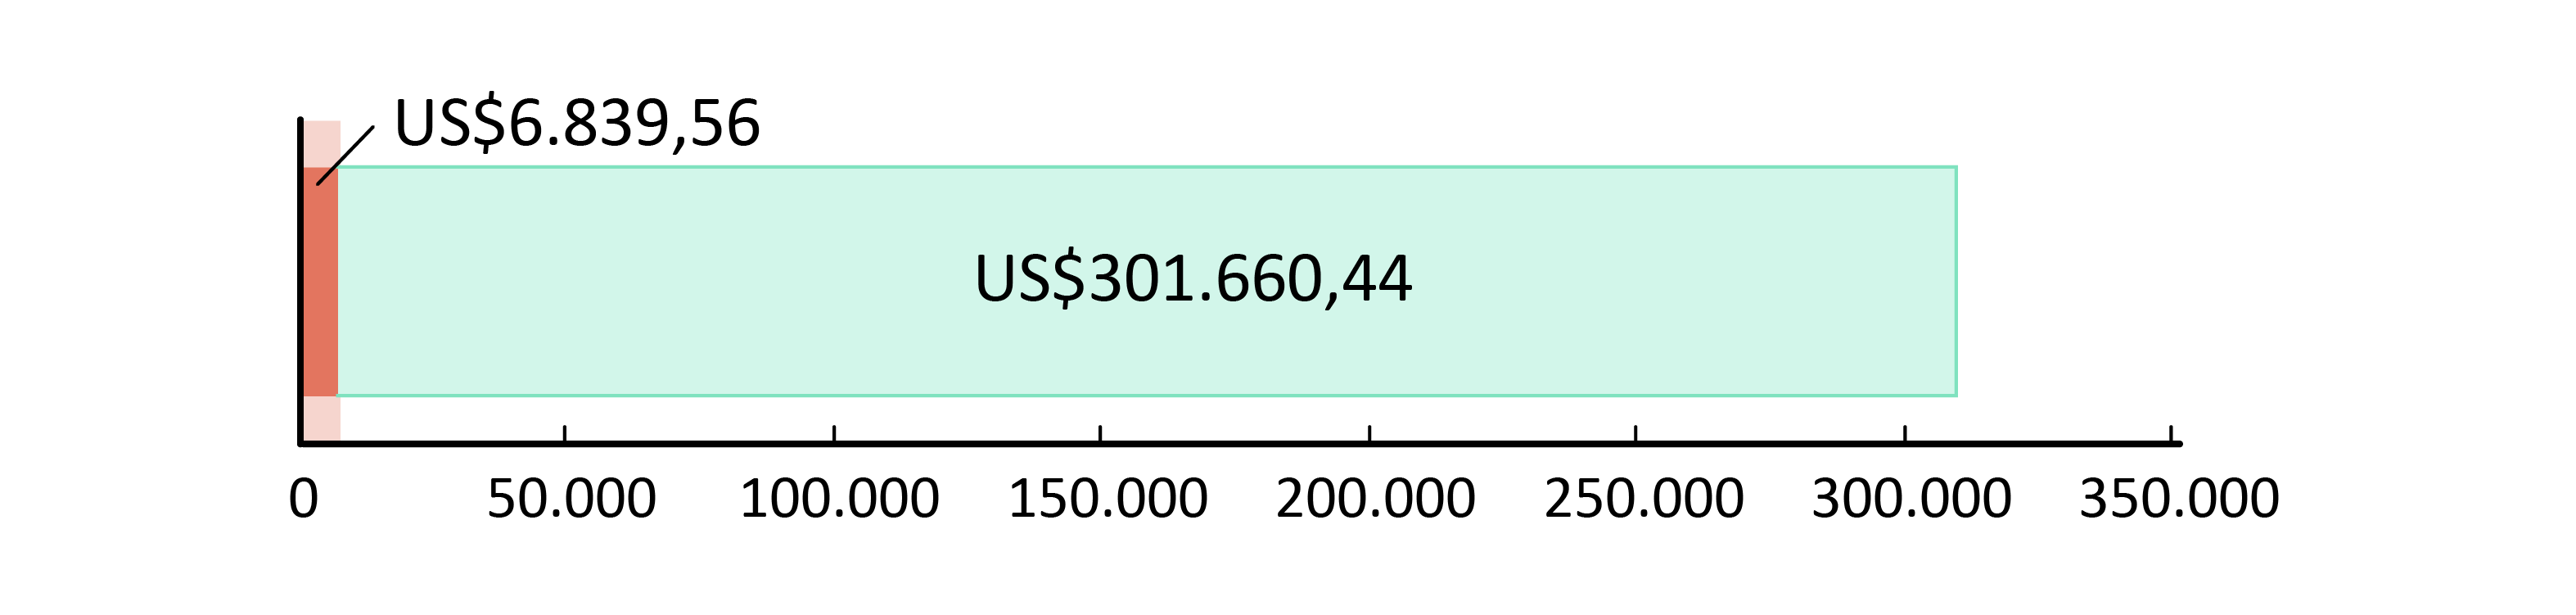 US$6.839,56 didonasikan; US$301.660,44 tersisa